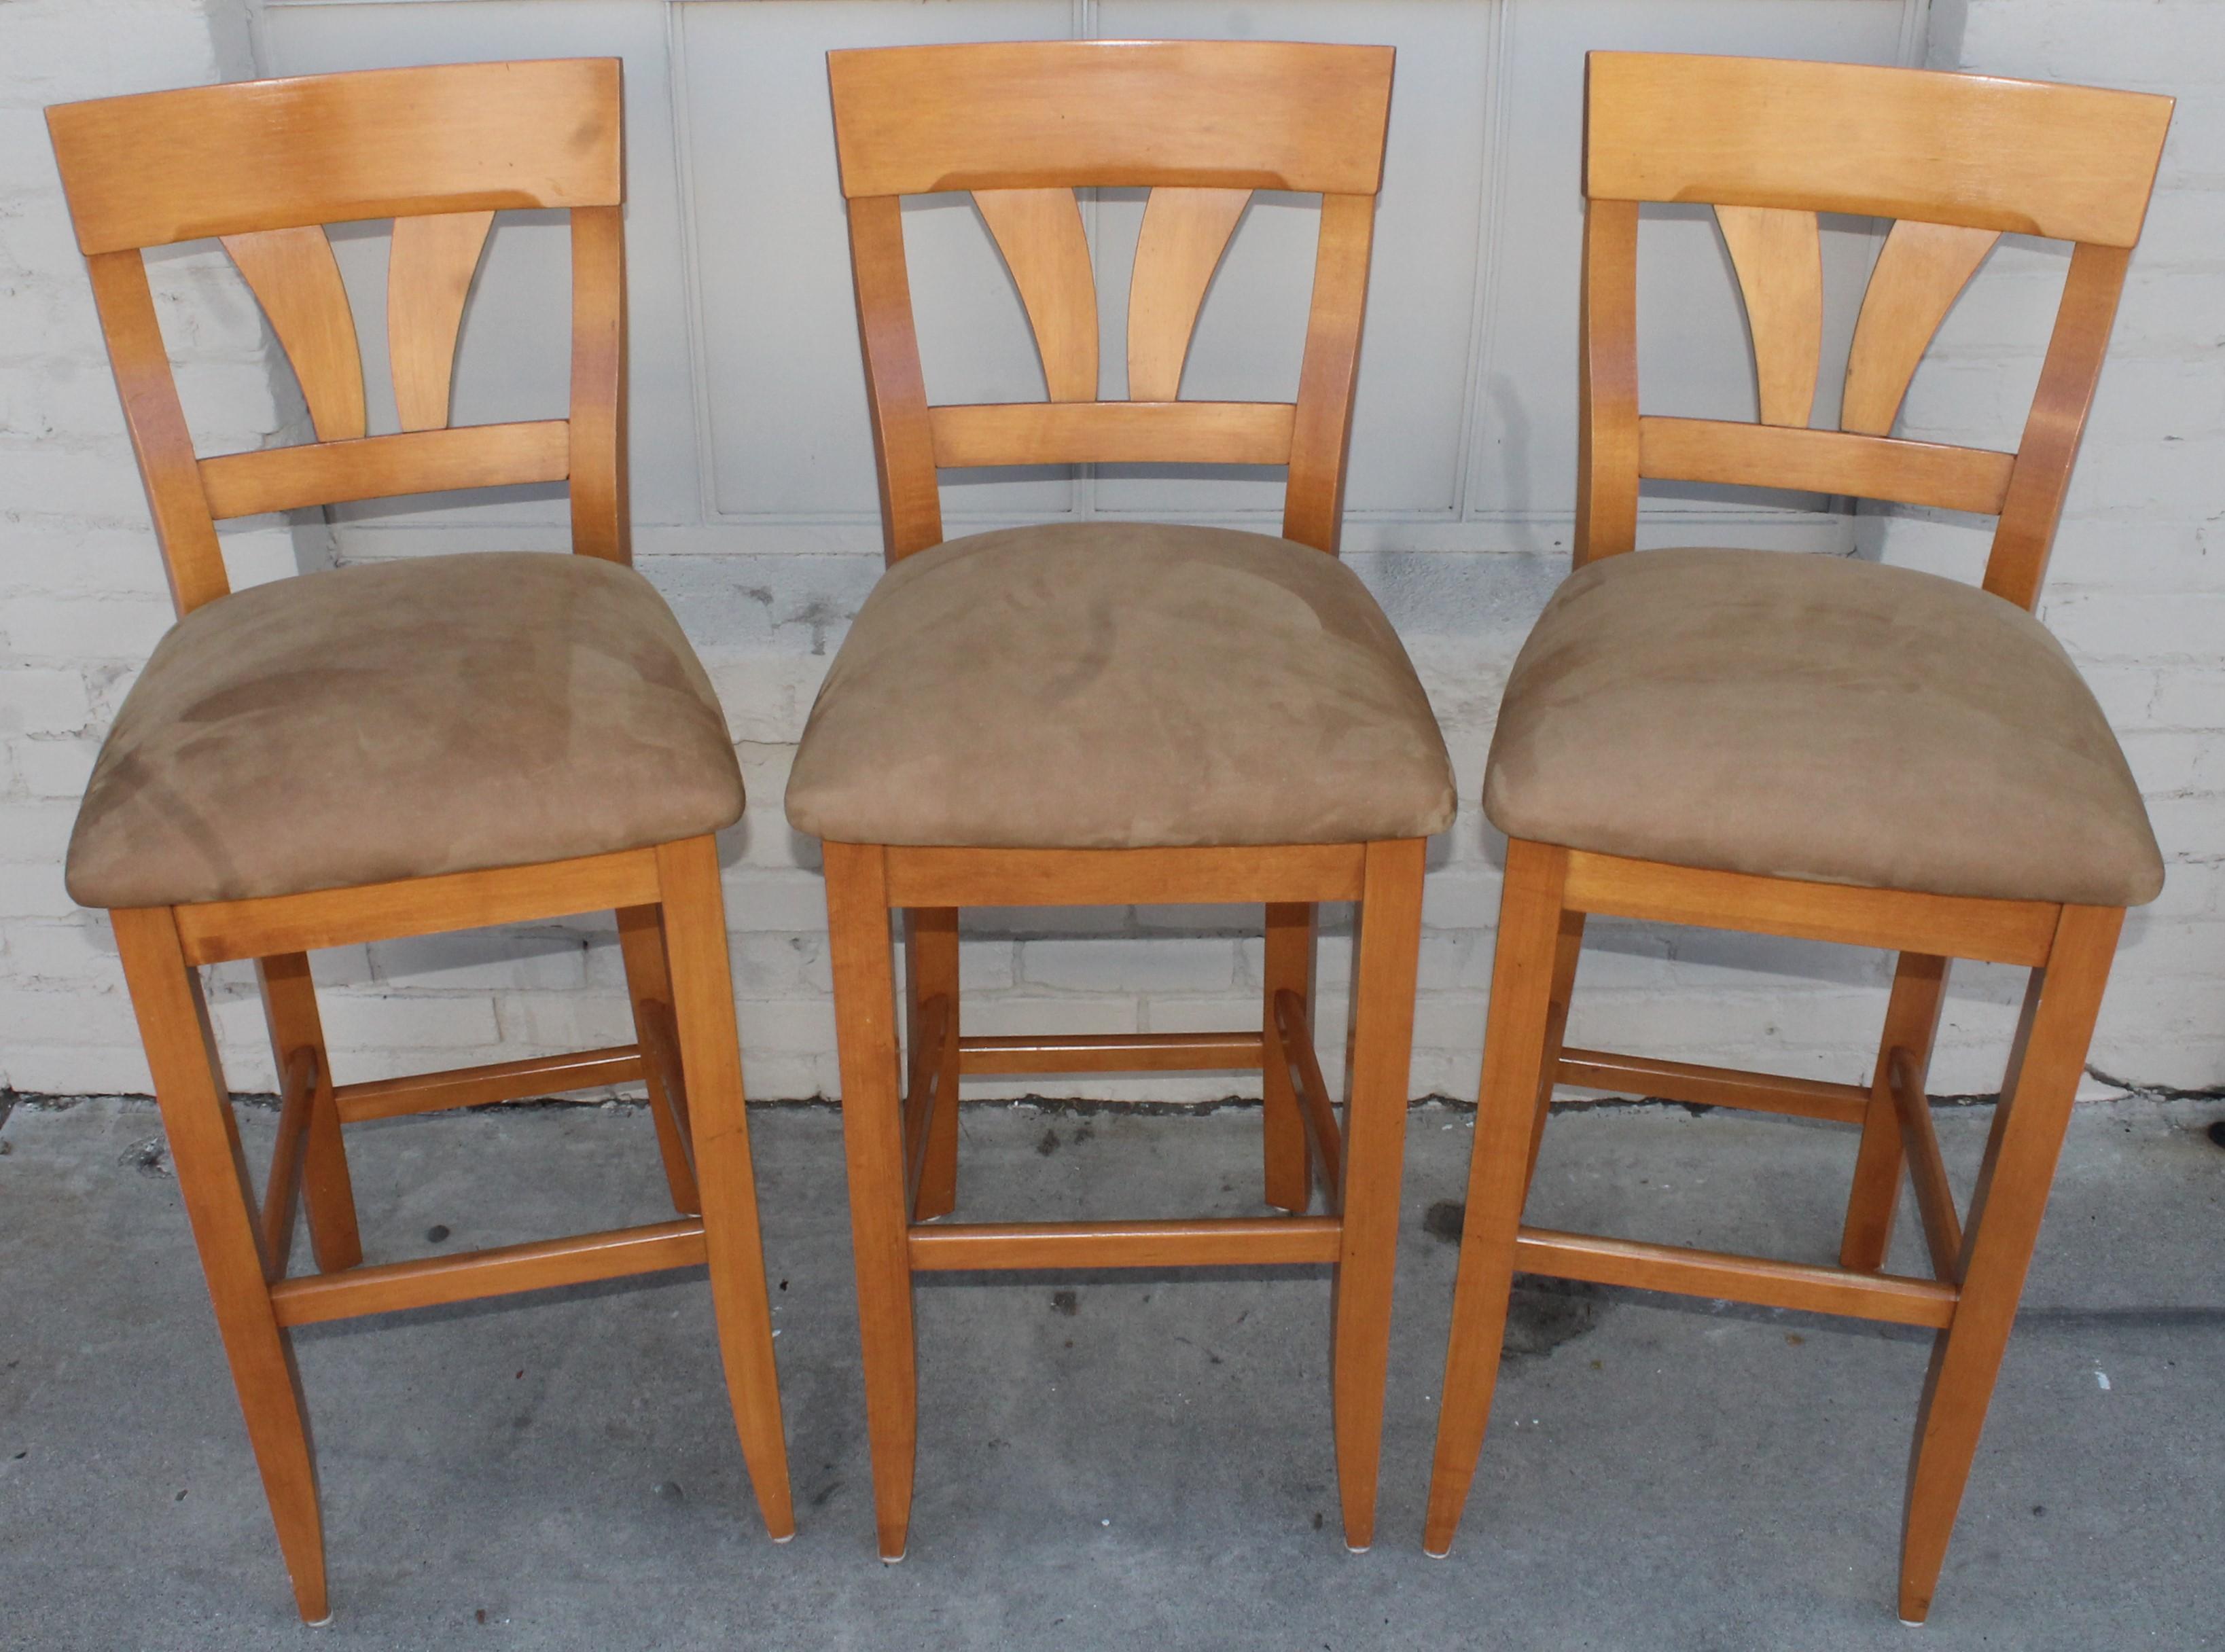 vintage bar stools with backs